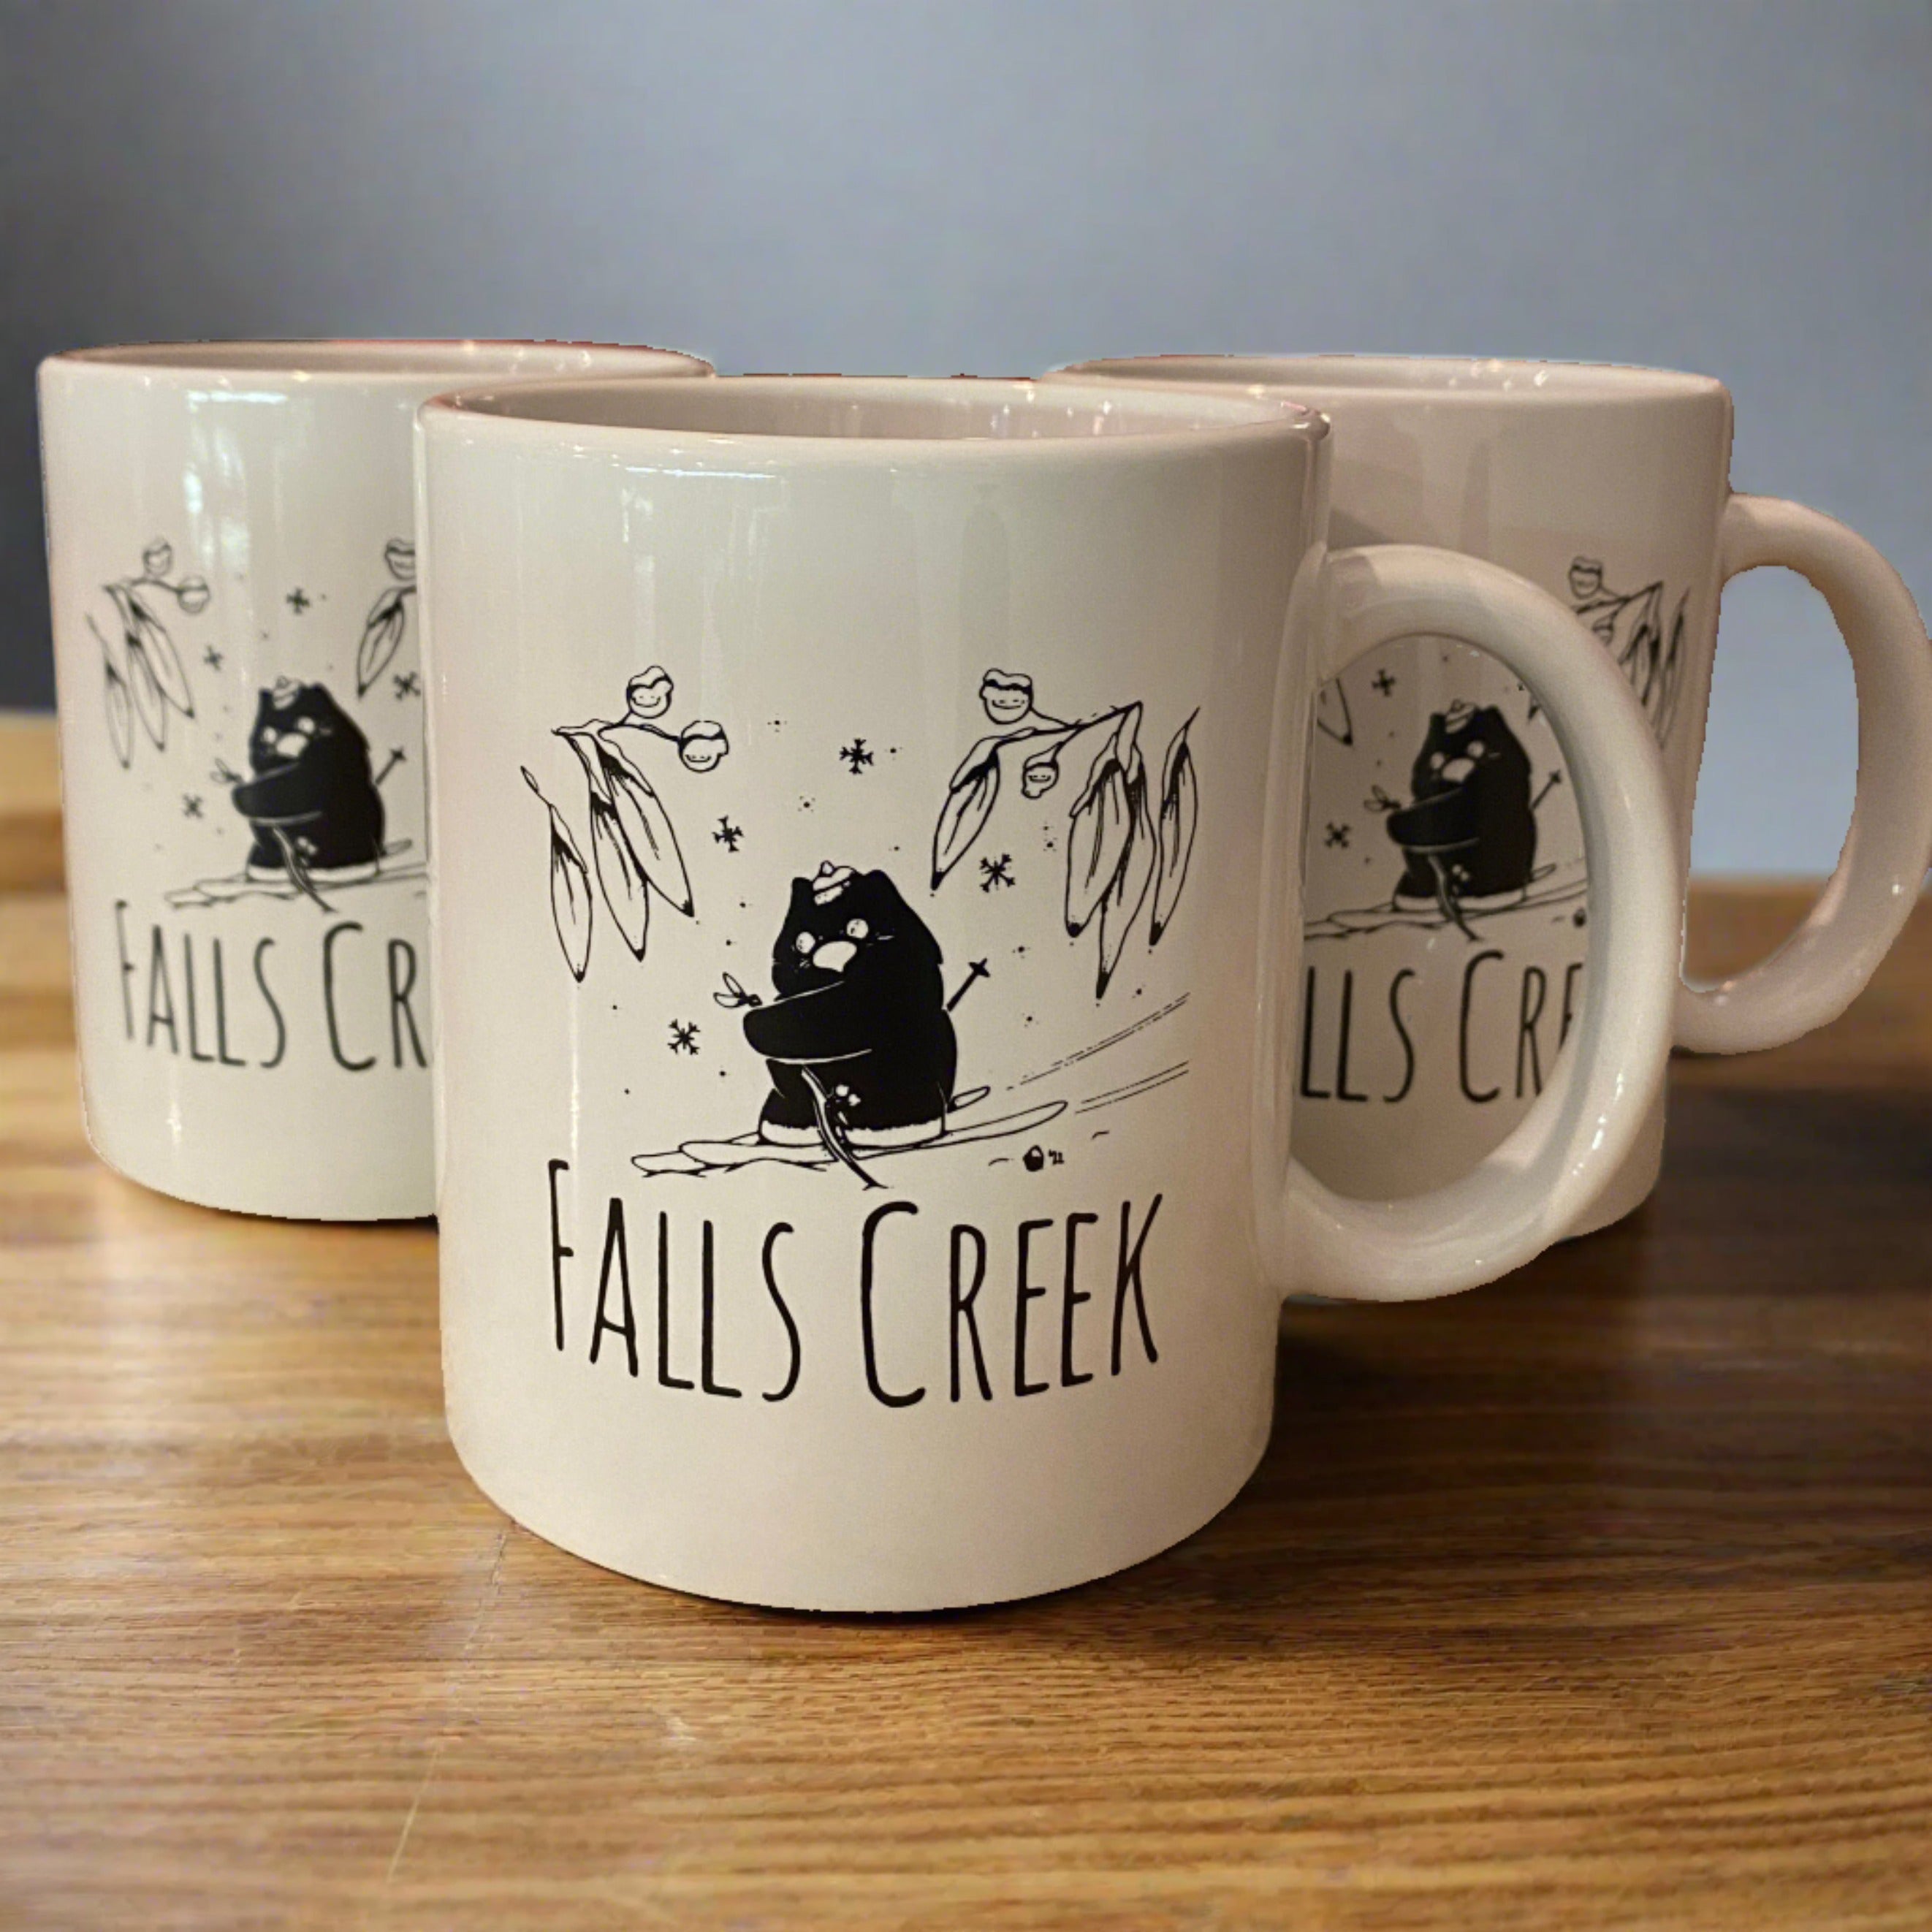 Falls Creek Agent W Ceramic Mugs. 3 Mugs on a wooden table top